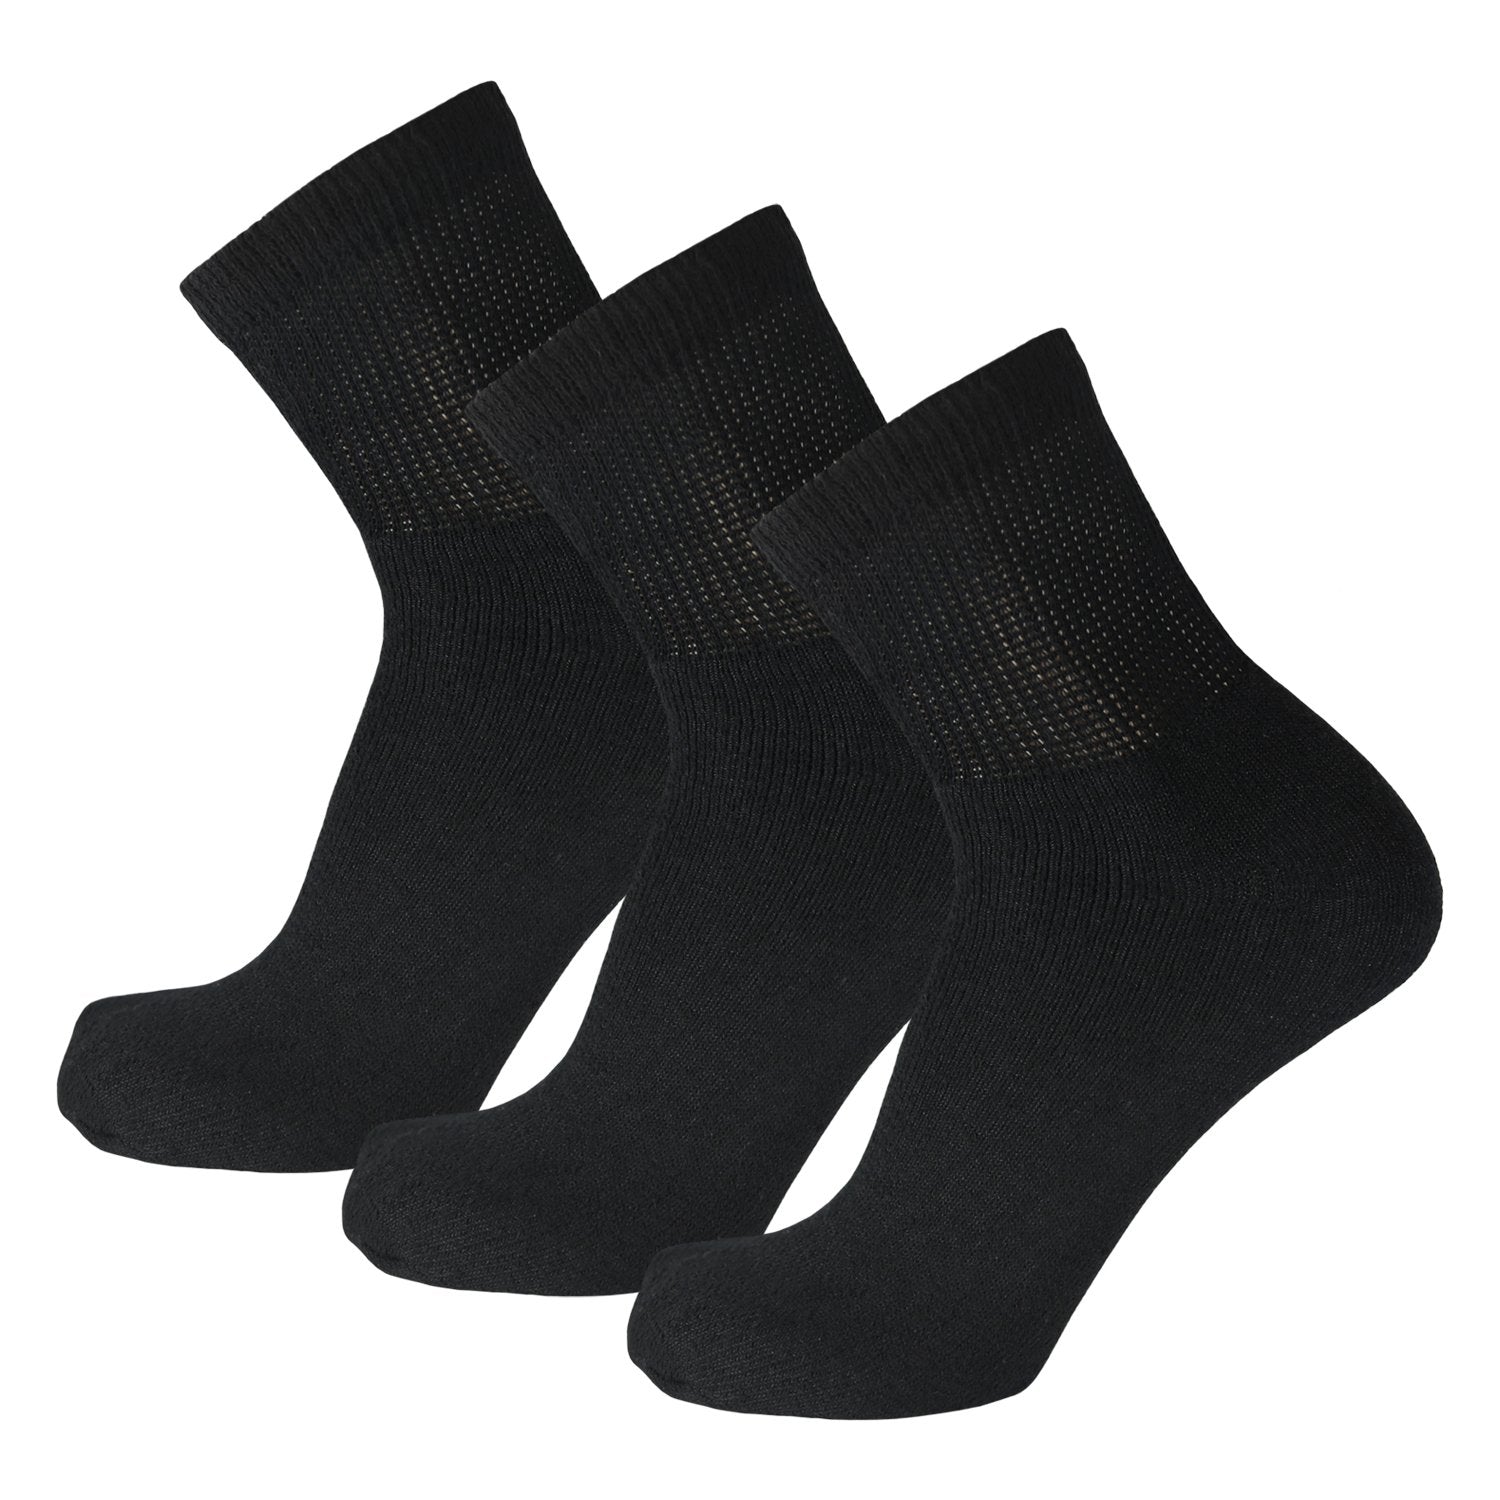 Black Non Binding Cotton Diabetic Ankle Socks 3 Pairs